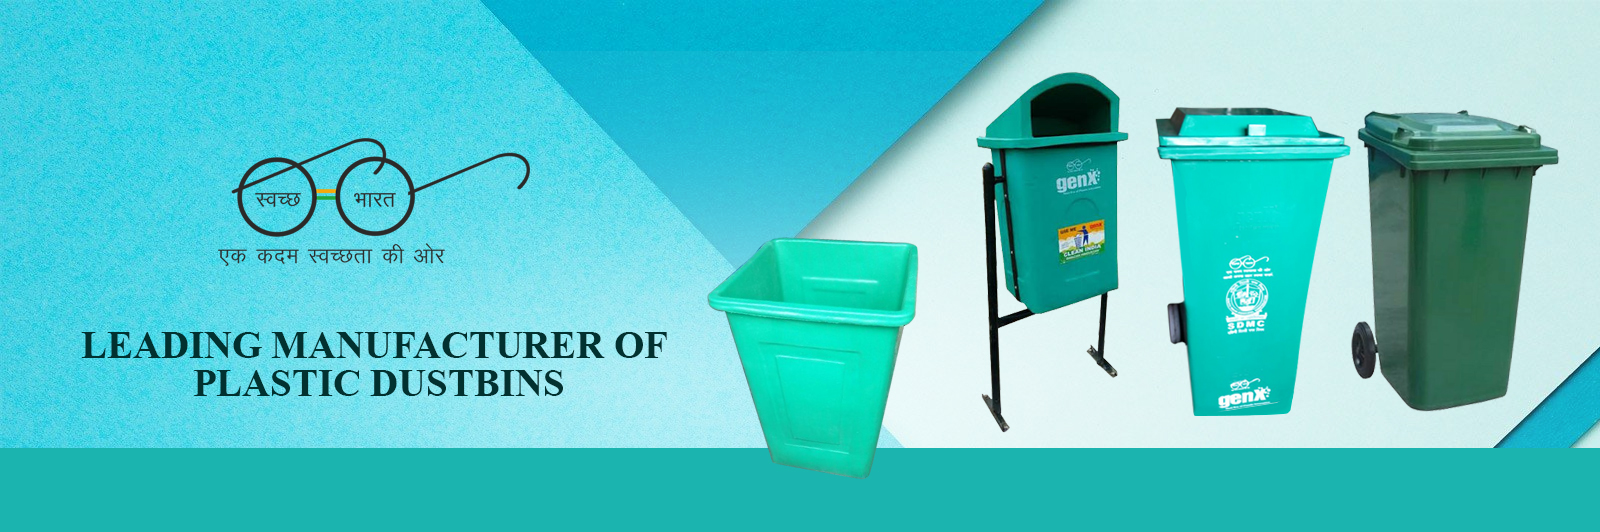 plastic dustbin manufacturers in delhi